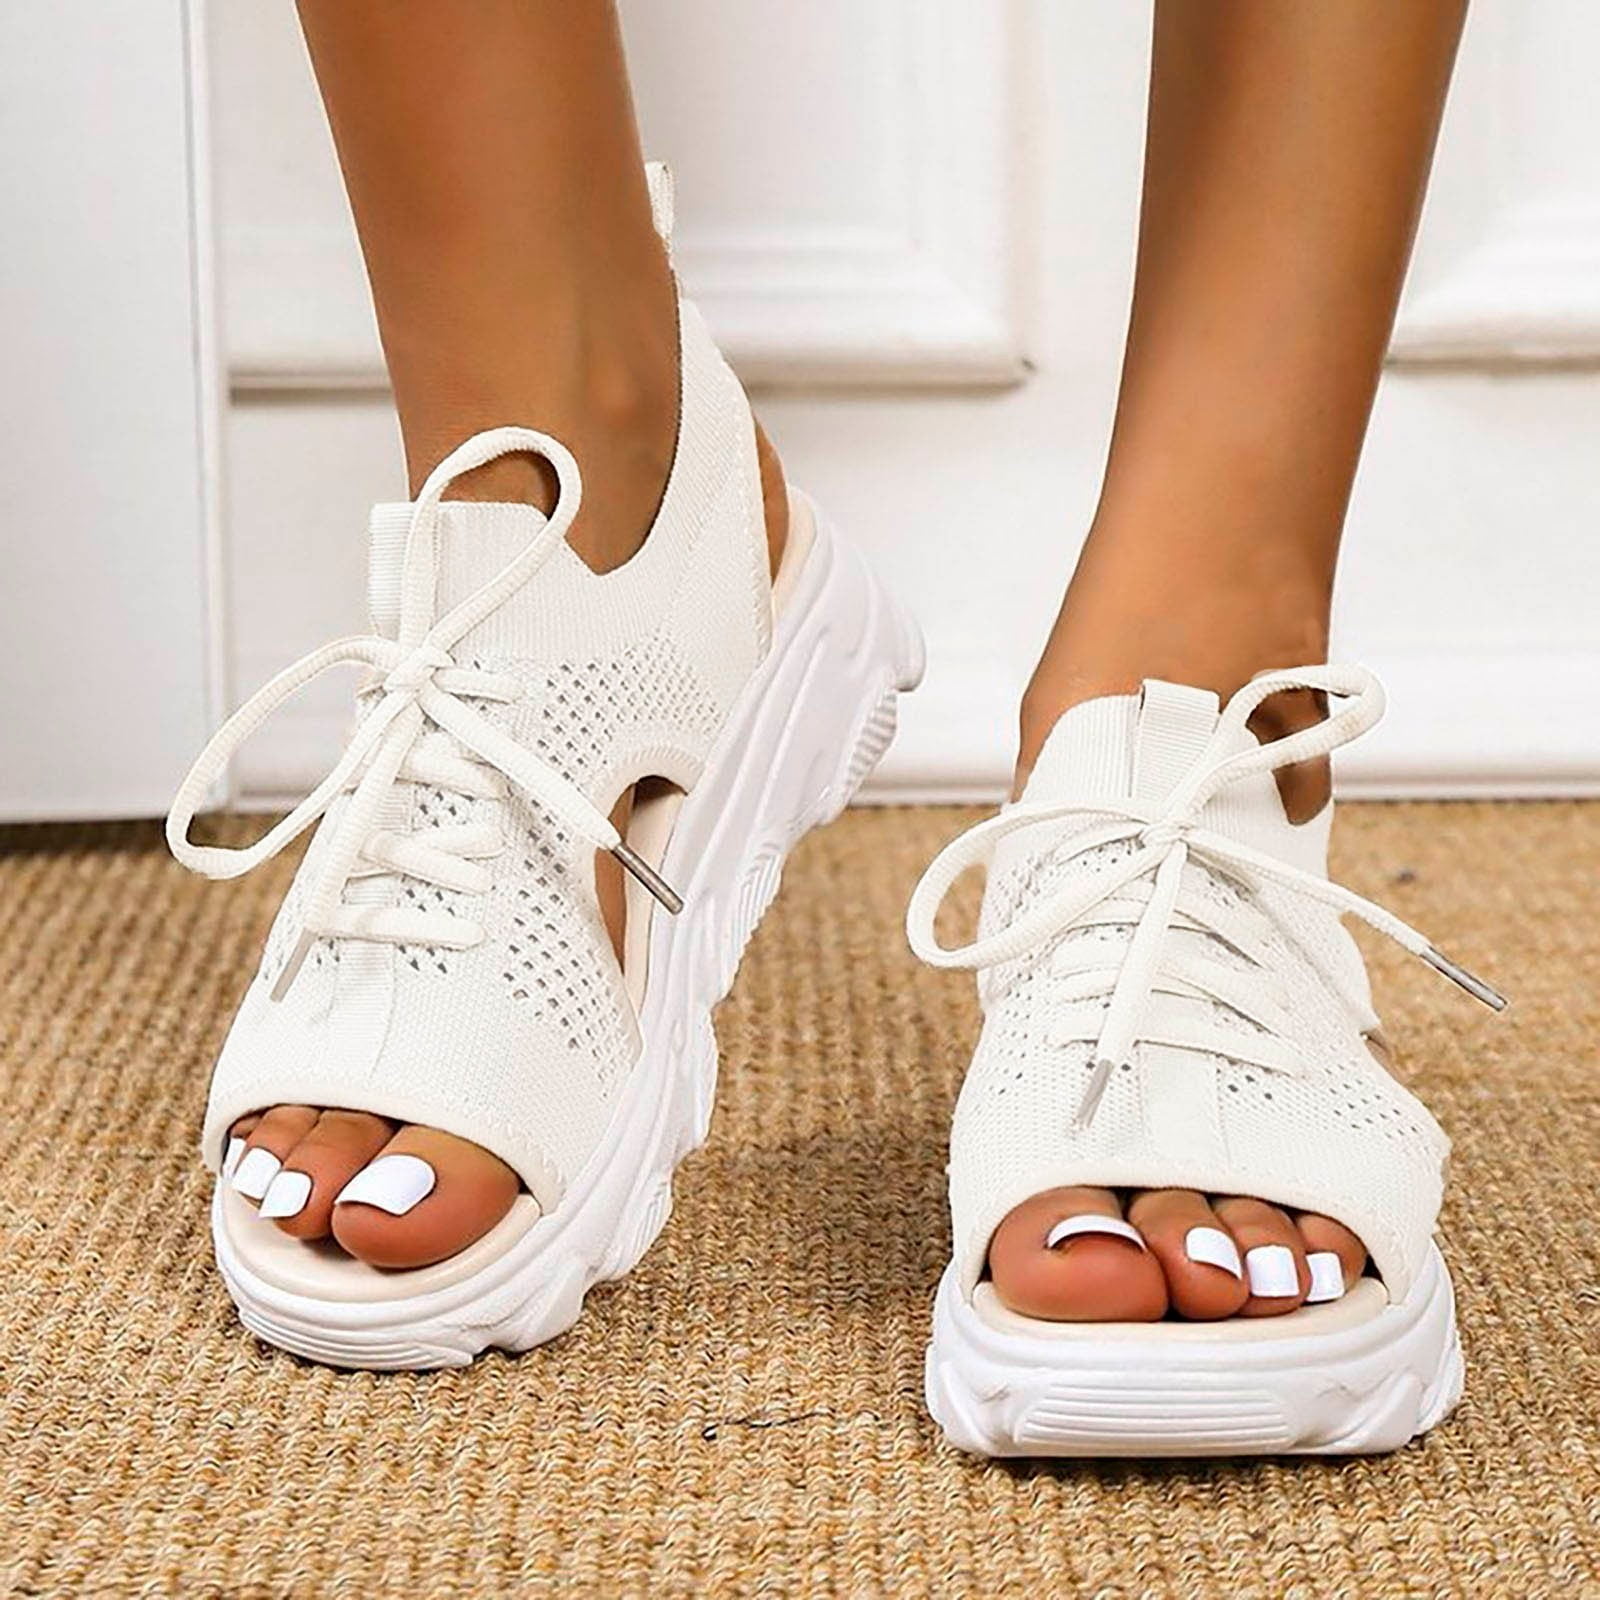 Platform Sandals Sandals Summer Sandals Mesh White Thick Soled Lace Sandals Open Toe Beach Shoes White Sandals Women -